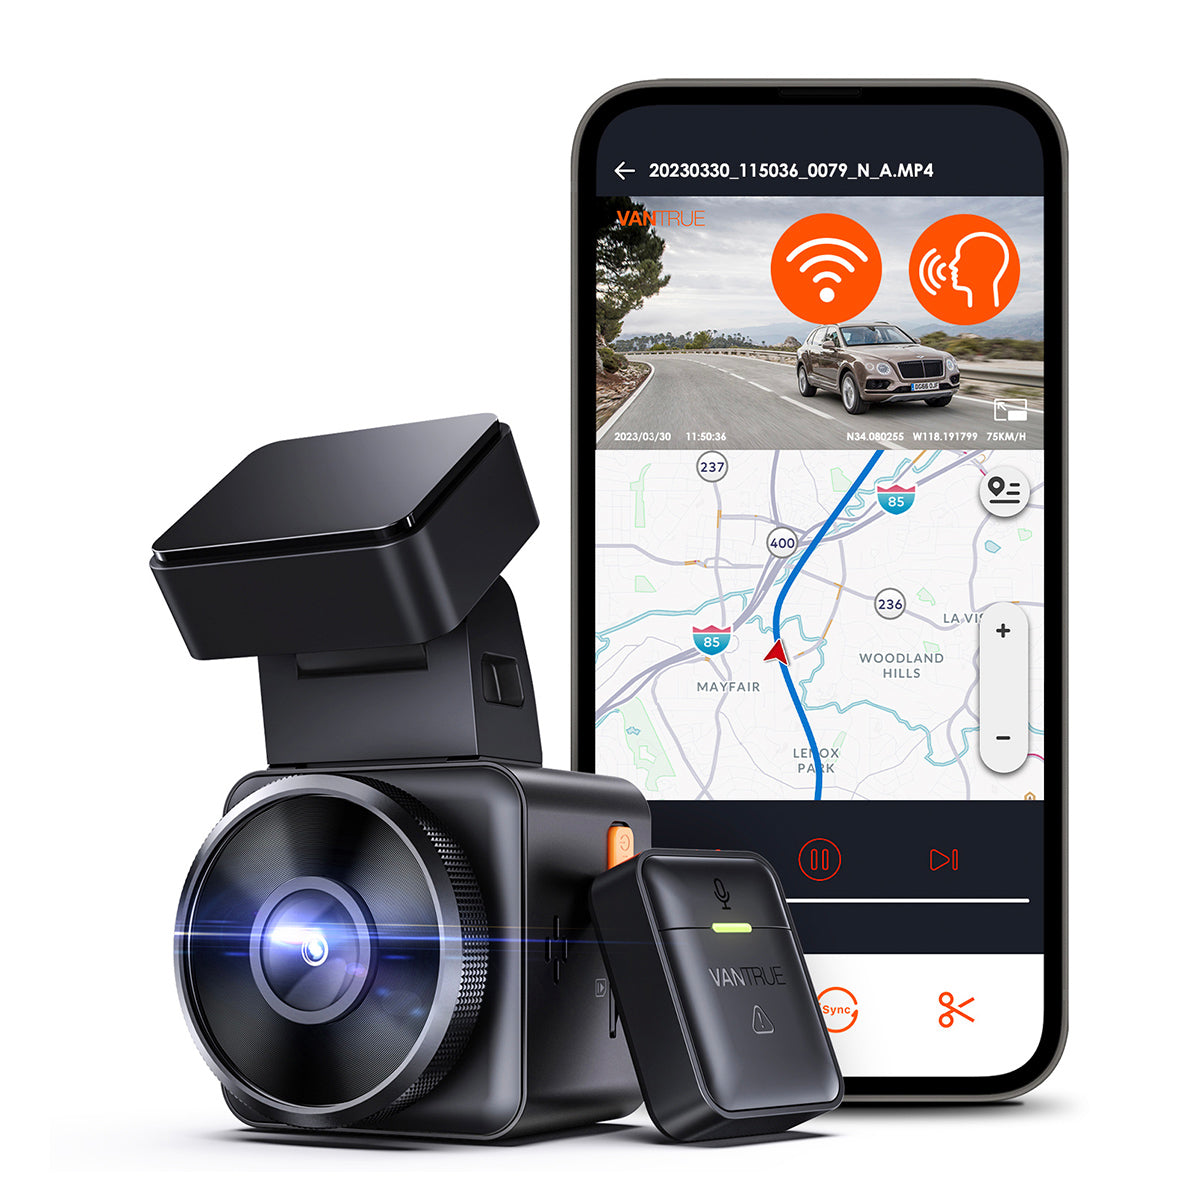 Vantrue E1-G WiFi Mini Dash Cam with Voice Control & GPS, Car Dash Camera with Remote Controller, Super Night Vision, 24 Hours Parking Mode, Buffered